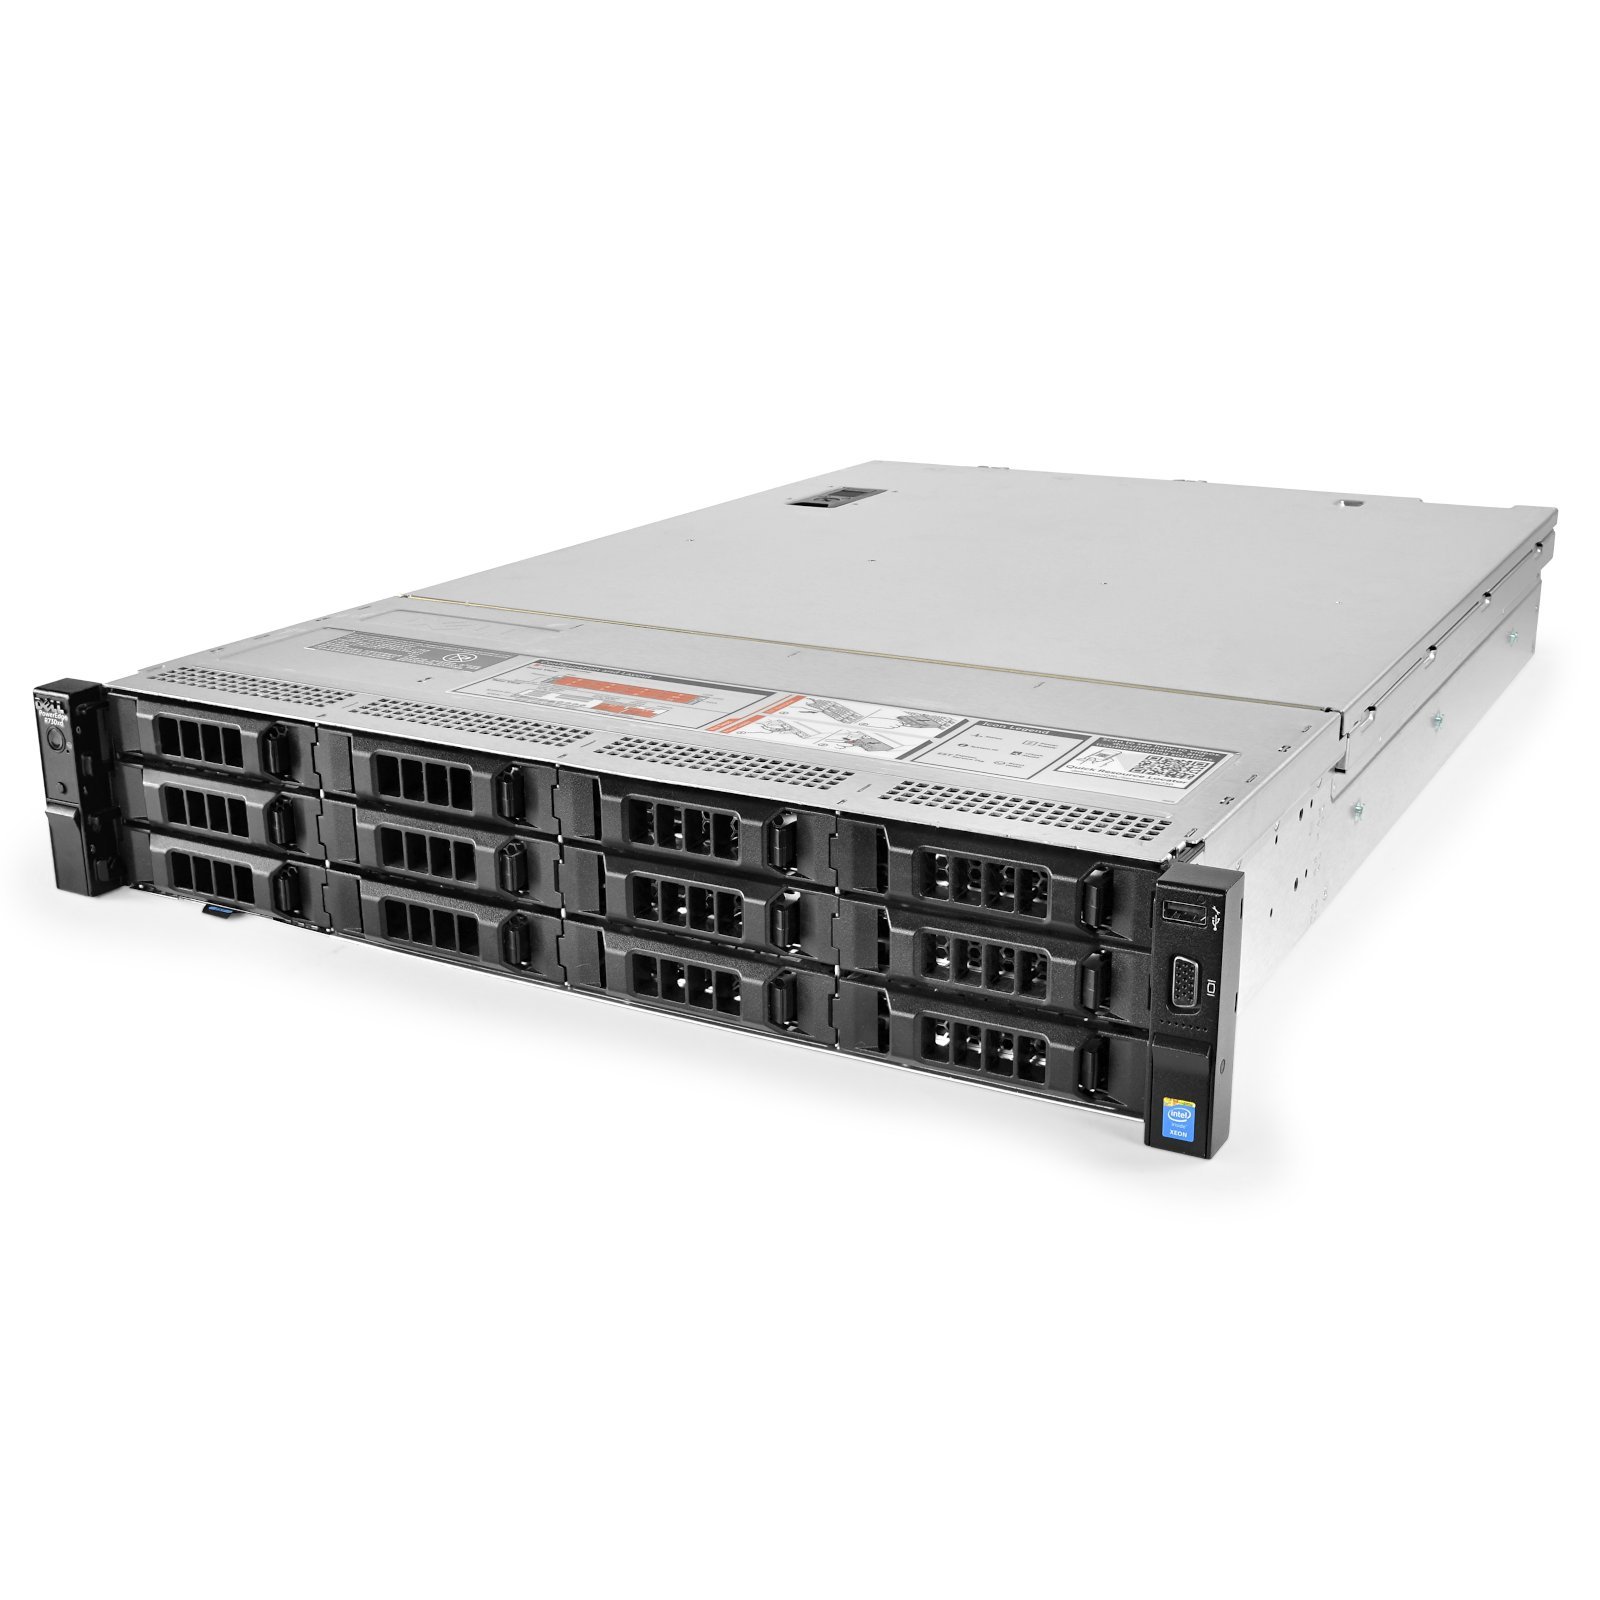 Подробное фото Сервер DELL PowerEdge R730XD Xeon 2x E5-2680v4 256Gb 2133P DDR4 12x noHDD 3.5", SAS RAID Perc H730 mini, 1024Mb, 2*PSU 750W